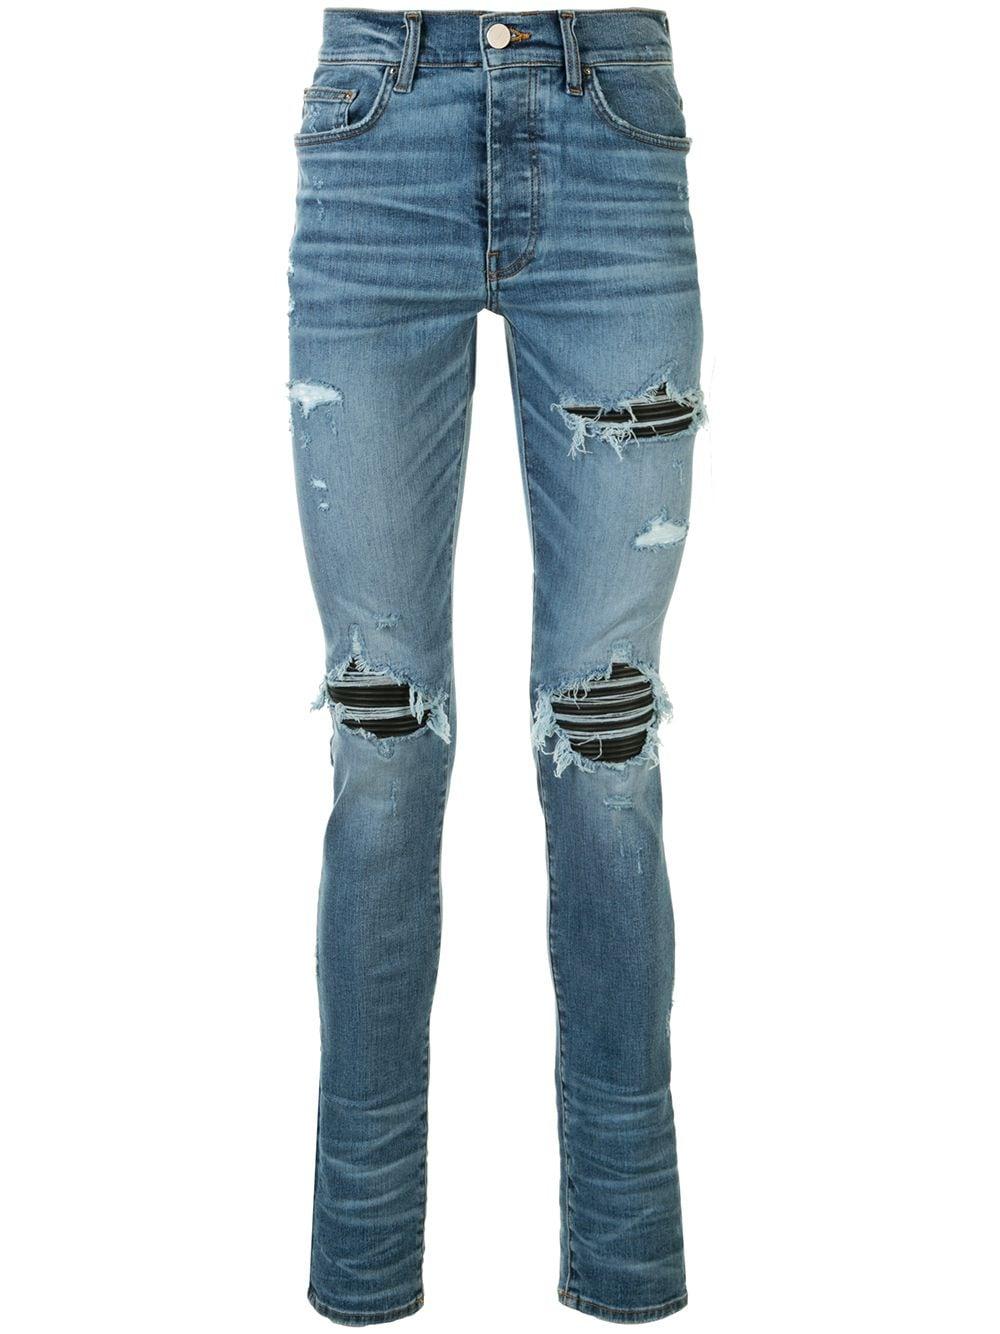 Amiri Denim Mx1 Distressed Skinny Jeans in Blue for Men - Lyst